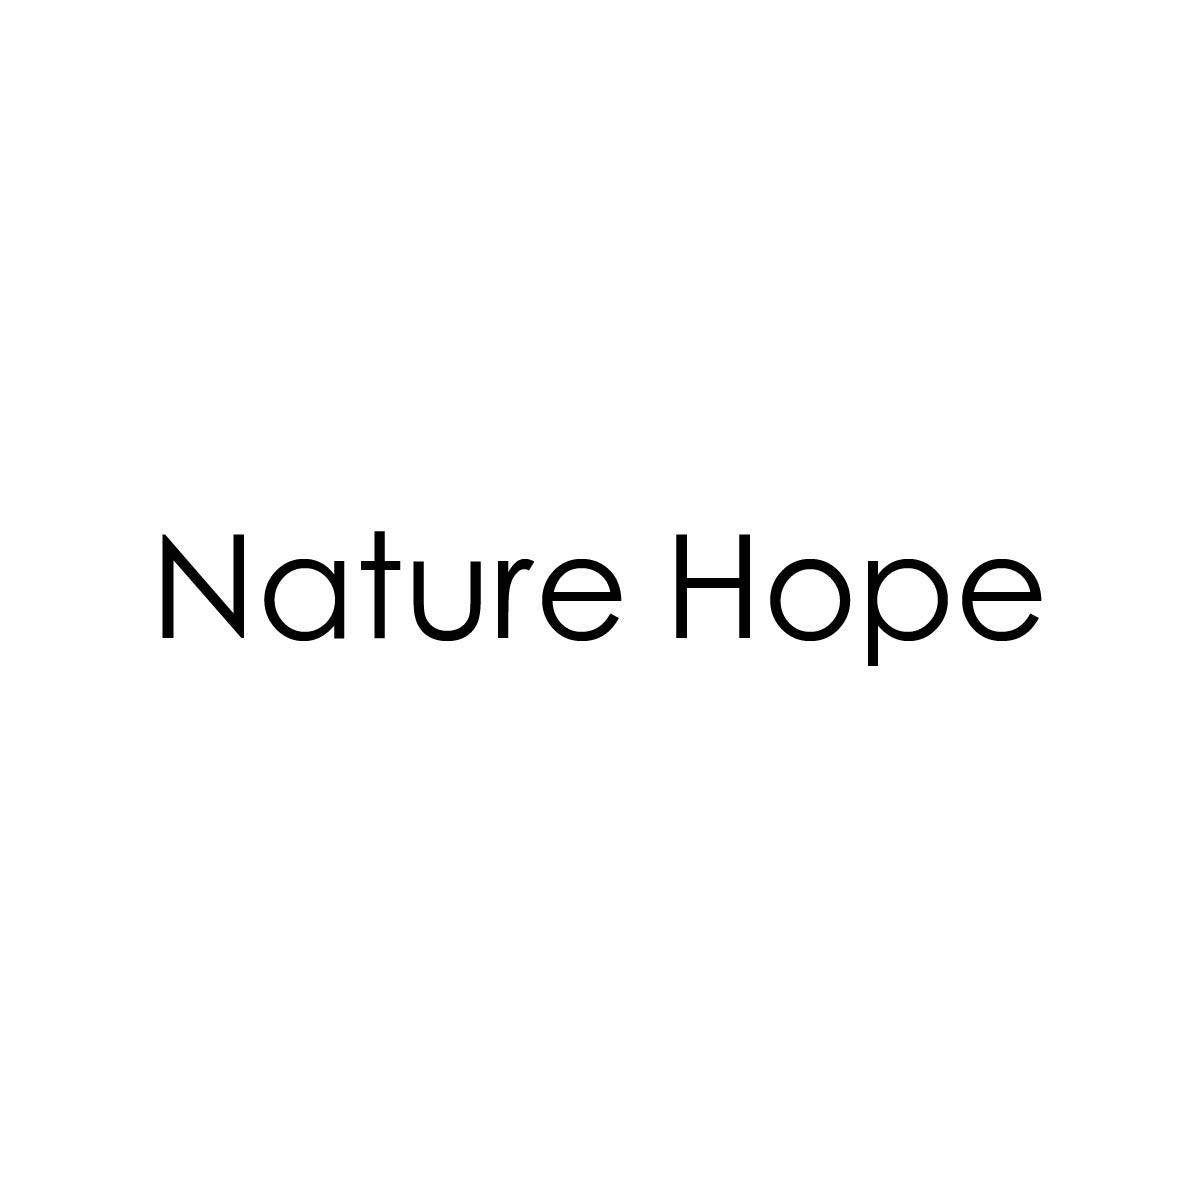 NATURE HOPE商标转让